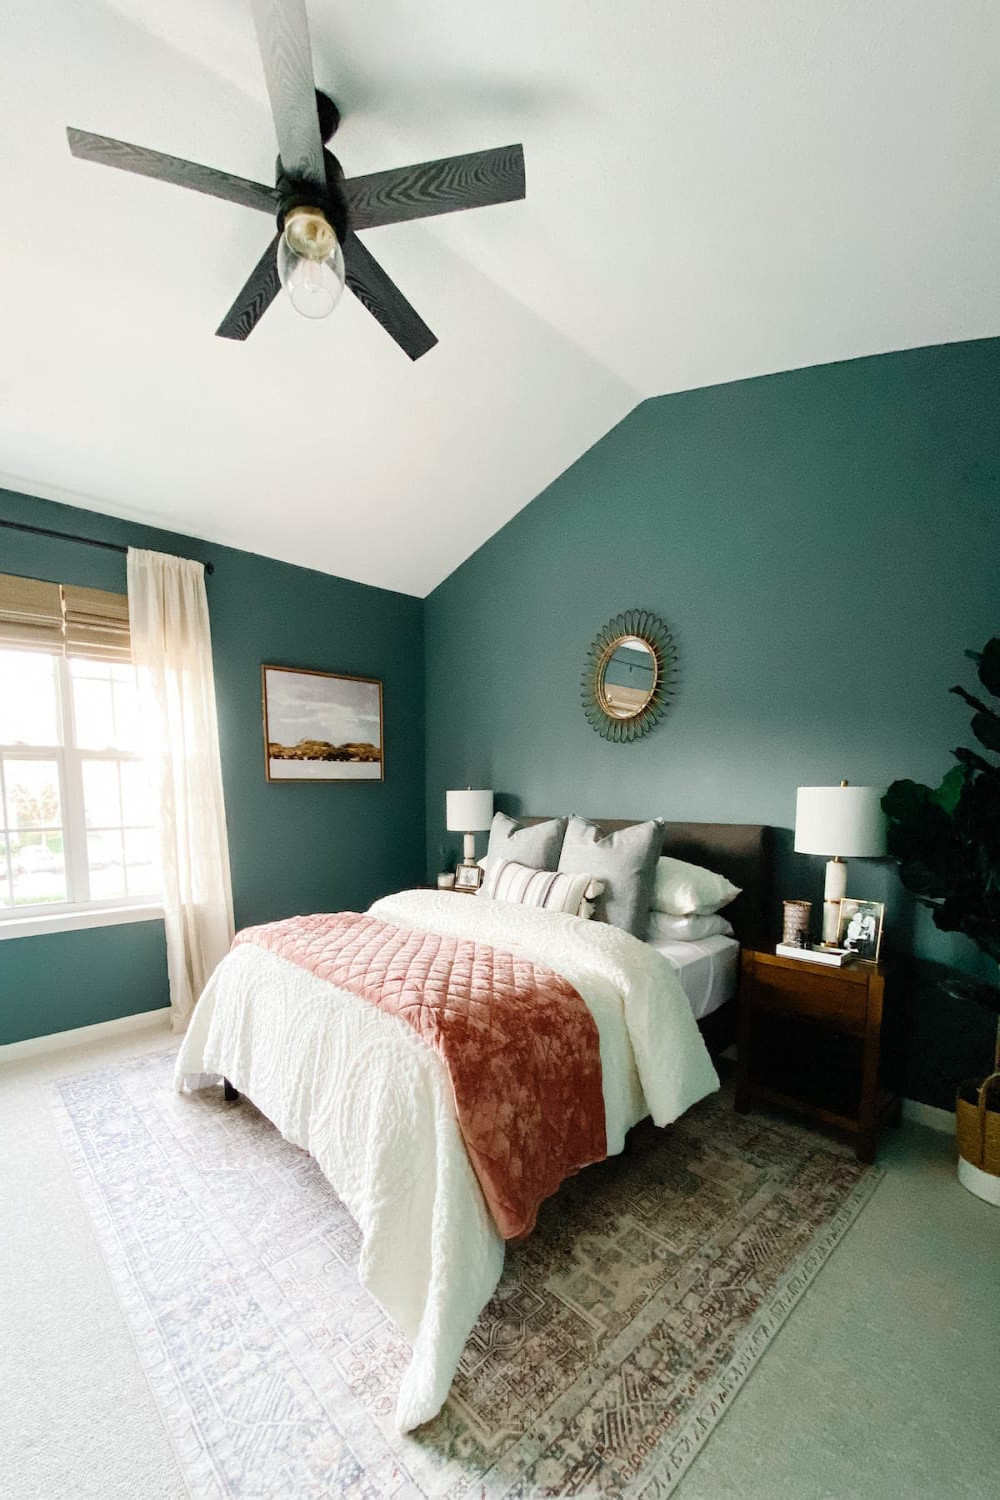 Bedroom Decor Ideas That Feel Like a Spa Retreat - Bless